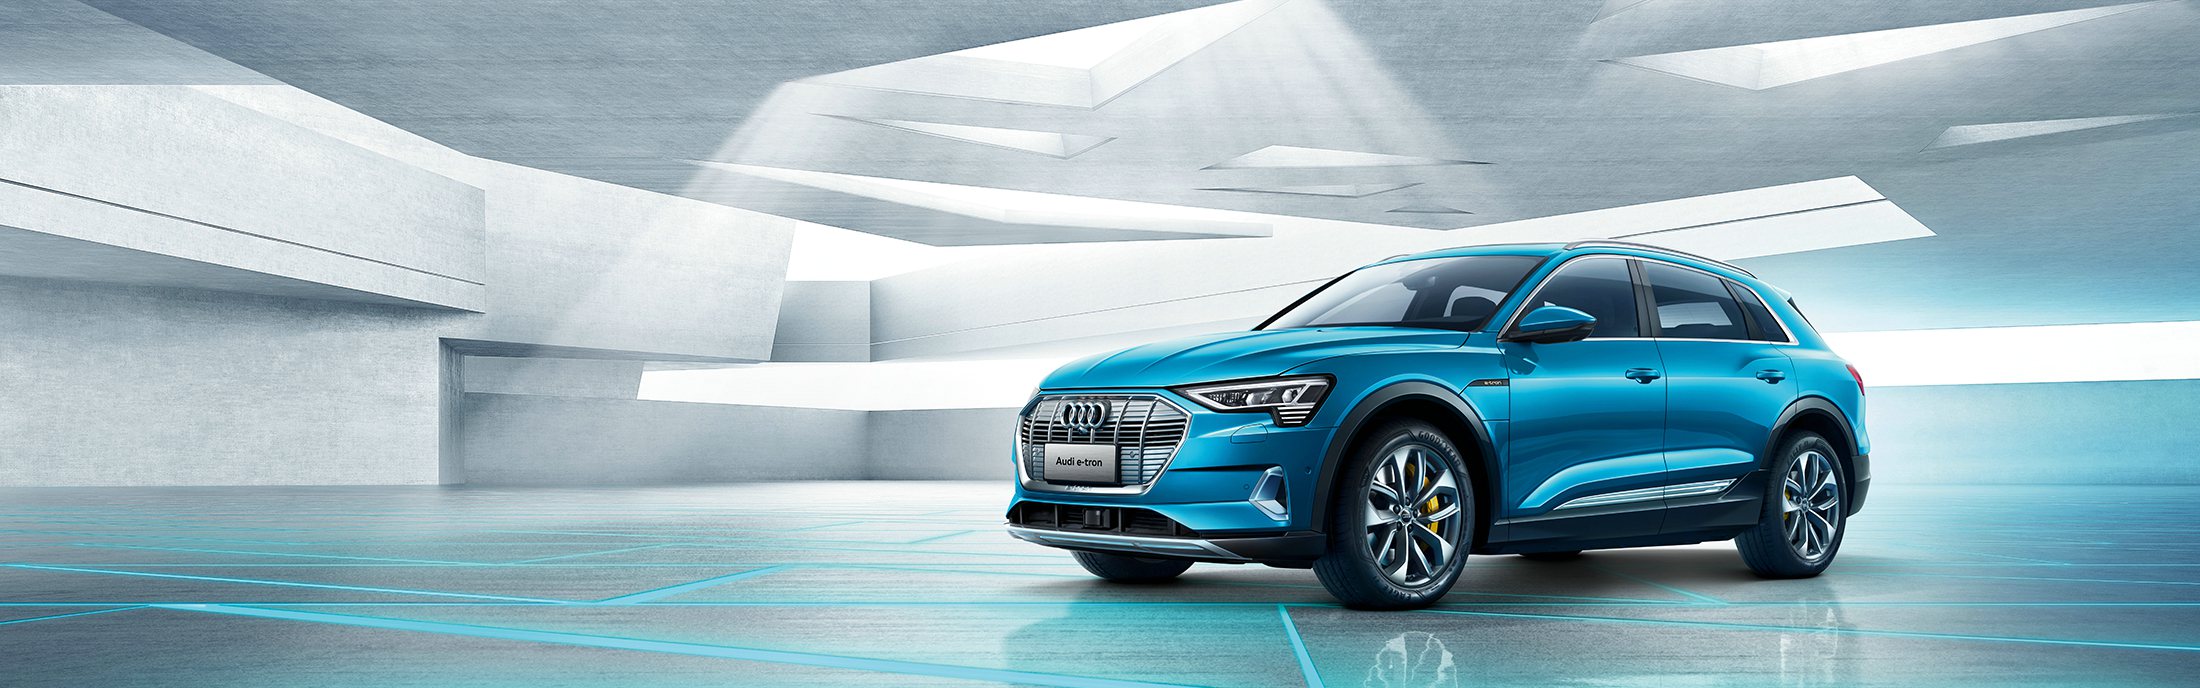 Audi e-tron是奥迪首款纯电动SUV